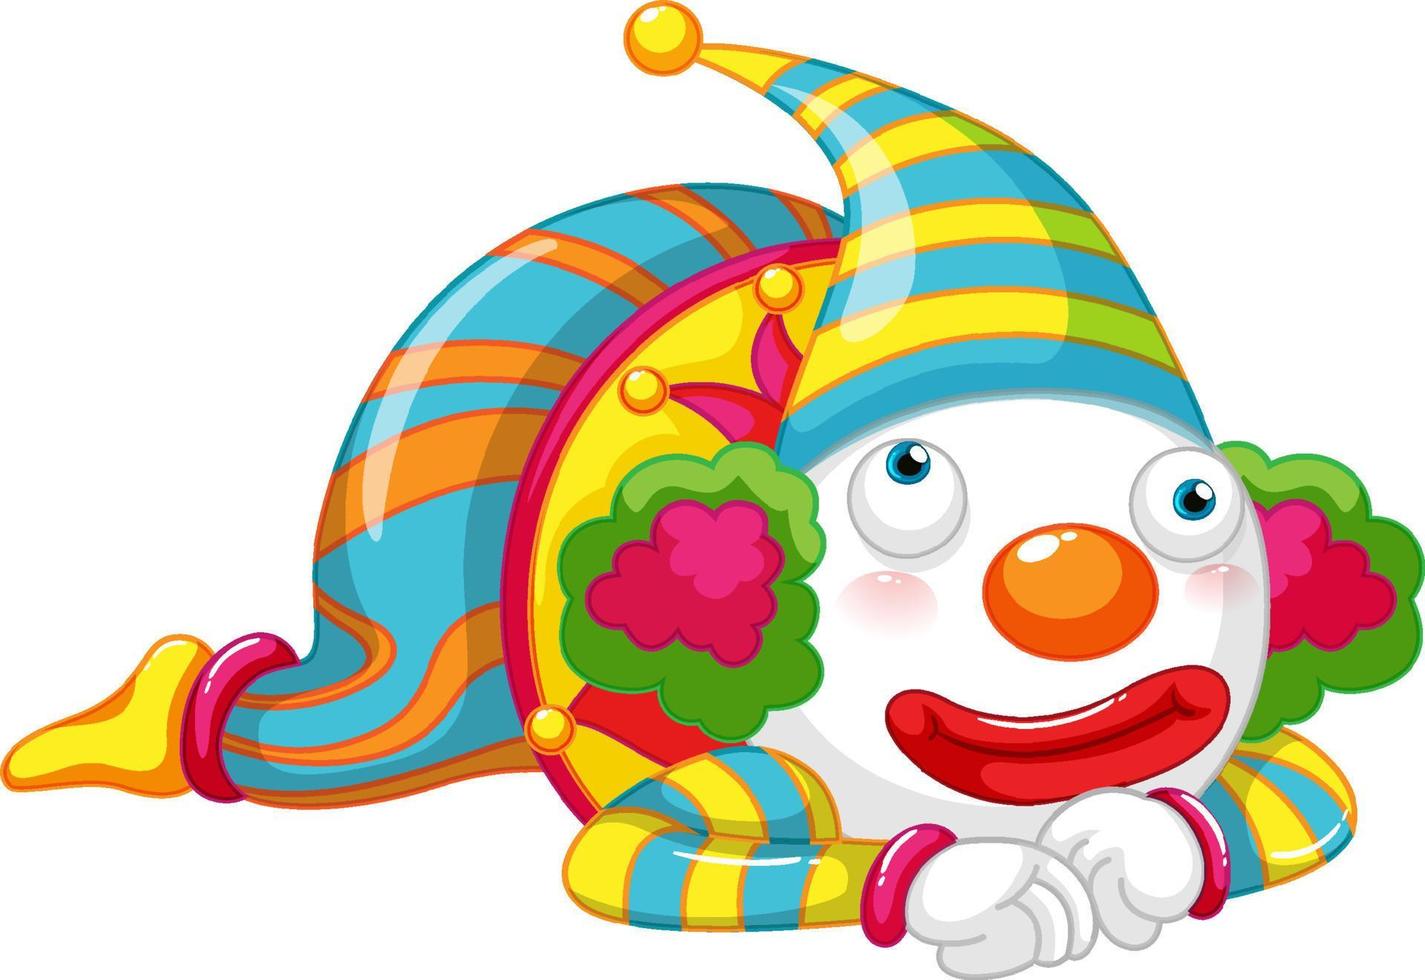 Clown cartoon character isolated vector